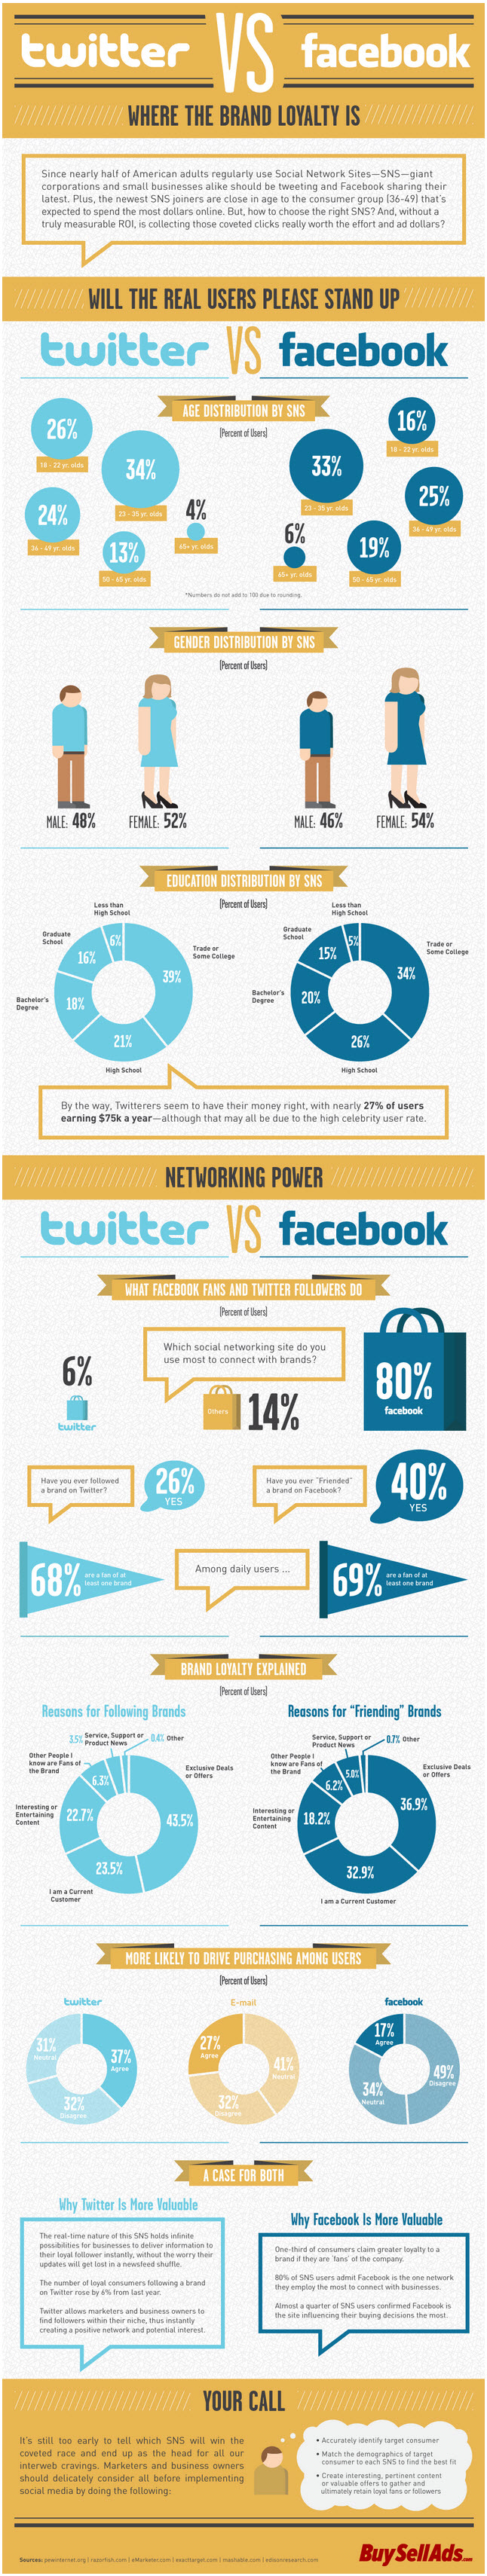 Twitter vs. Facebook Marketing and Advertising Statistics